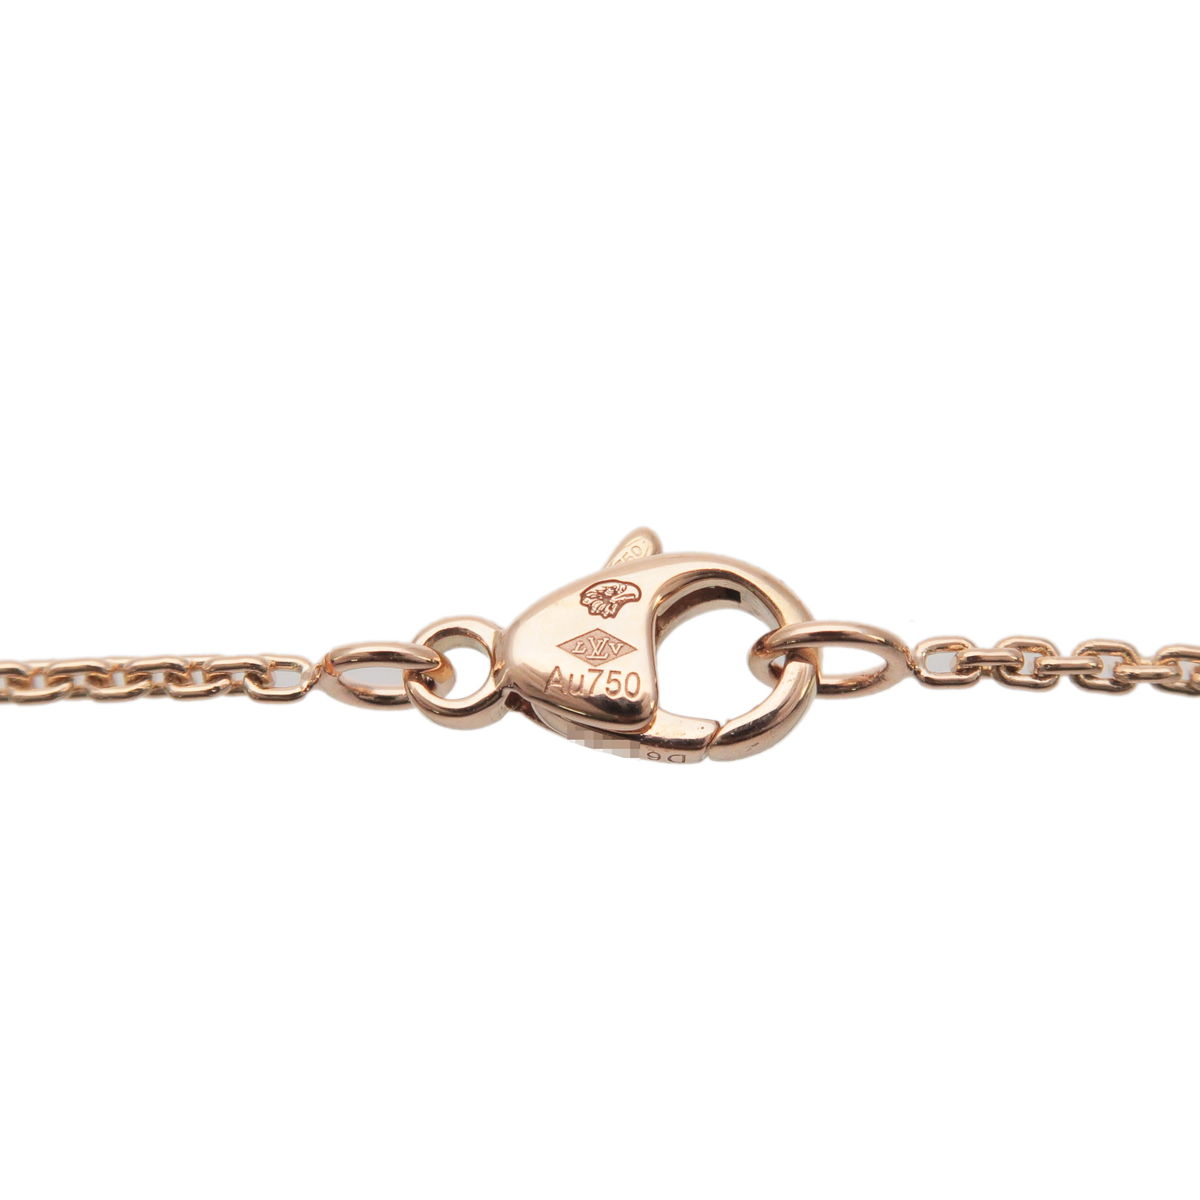 Louis Vuitton Idylle blossom lv pendant, yellow gold and diamond (Q93626)